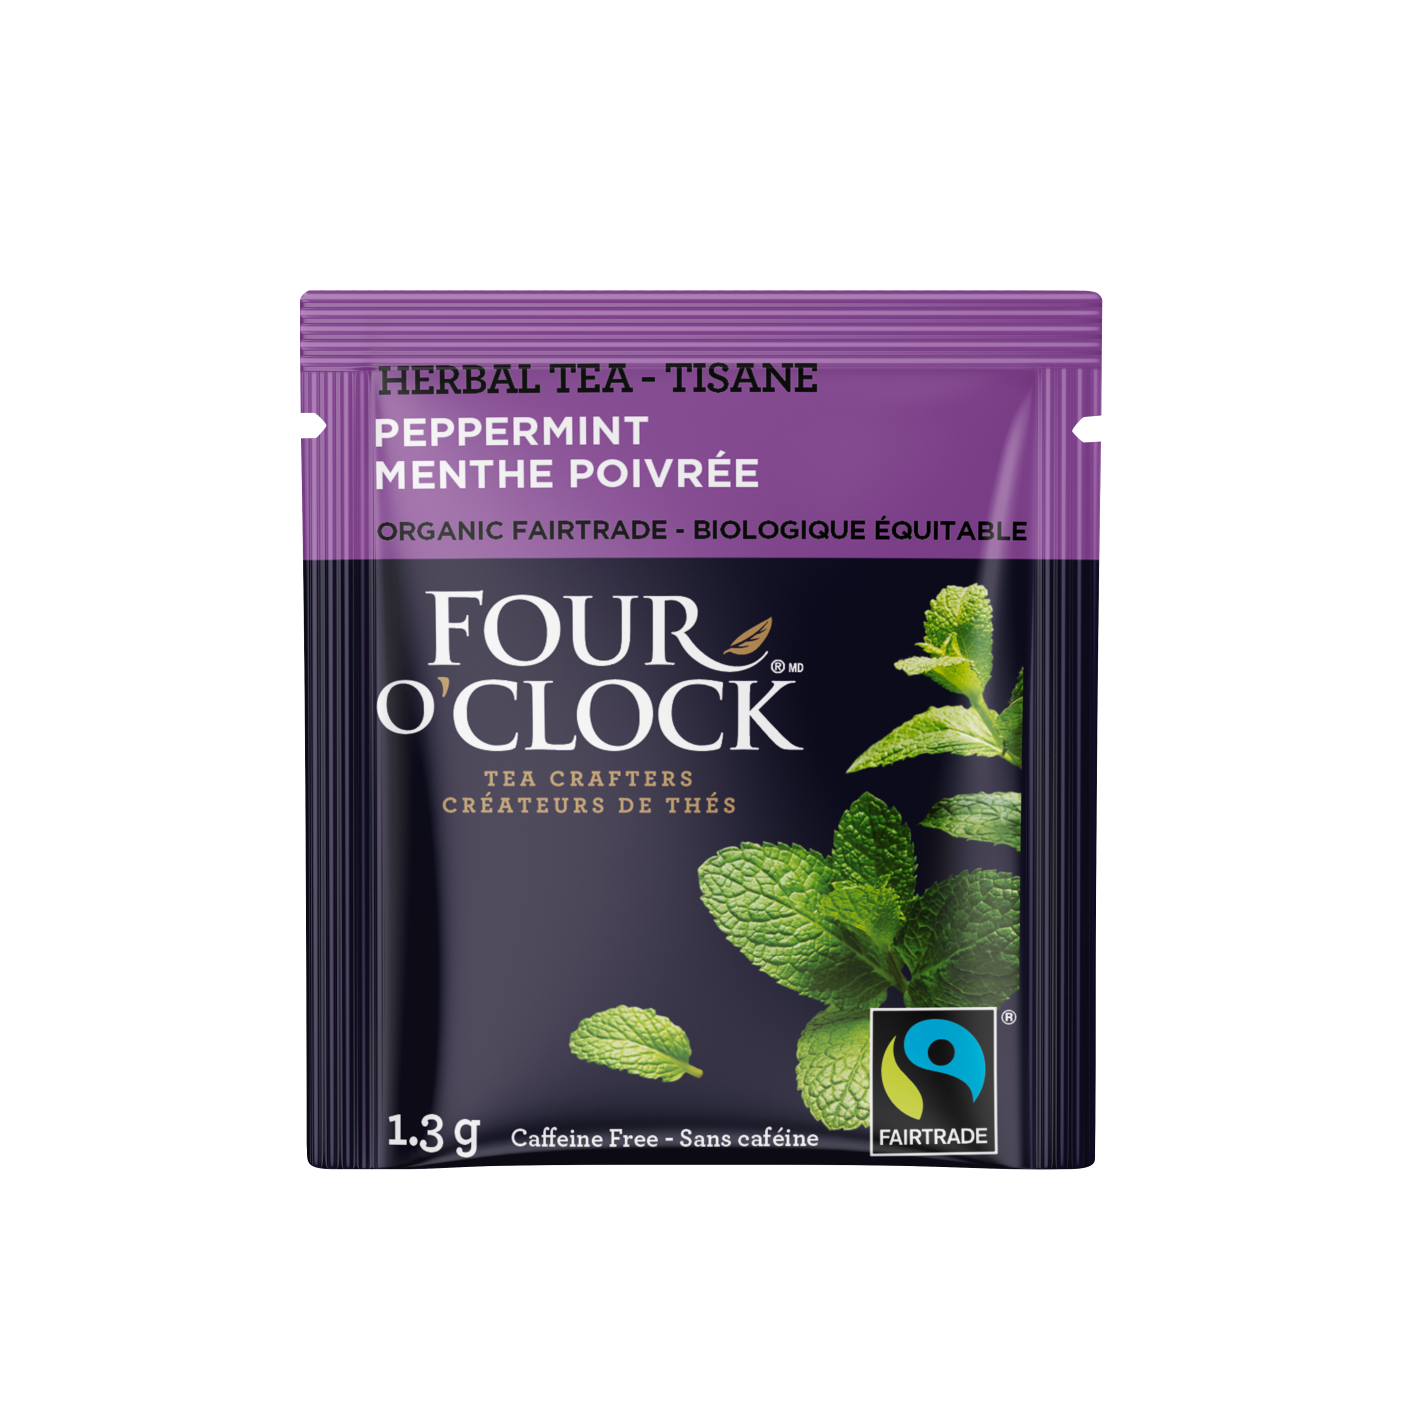 Peppermint Organic Fairtrade Herbal Tea